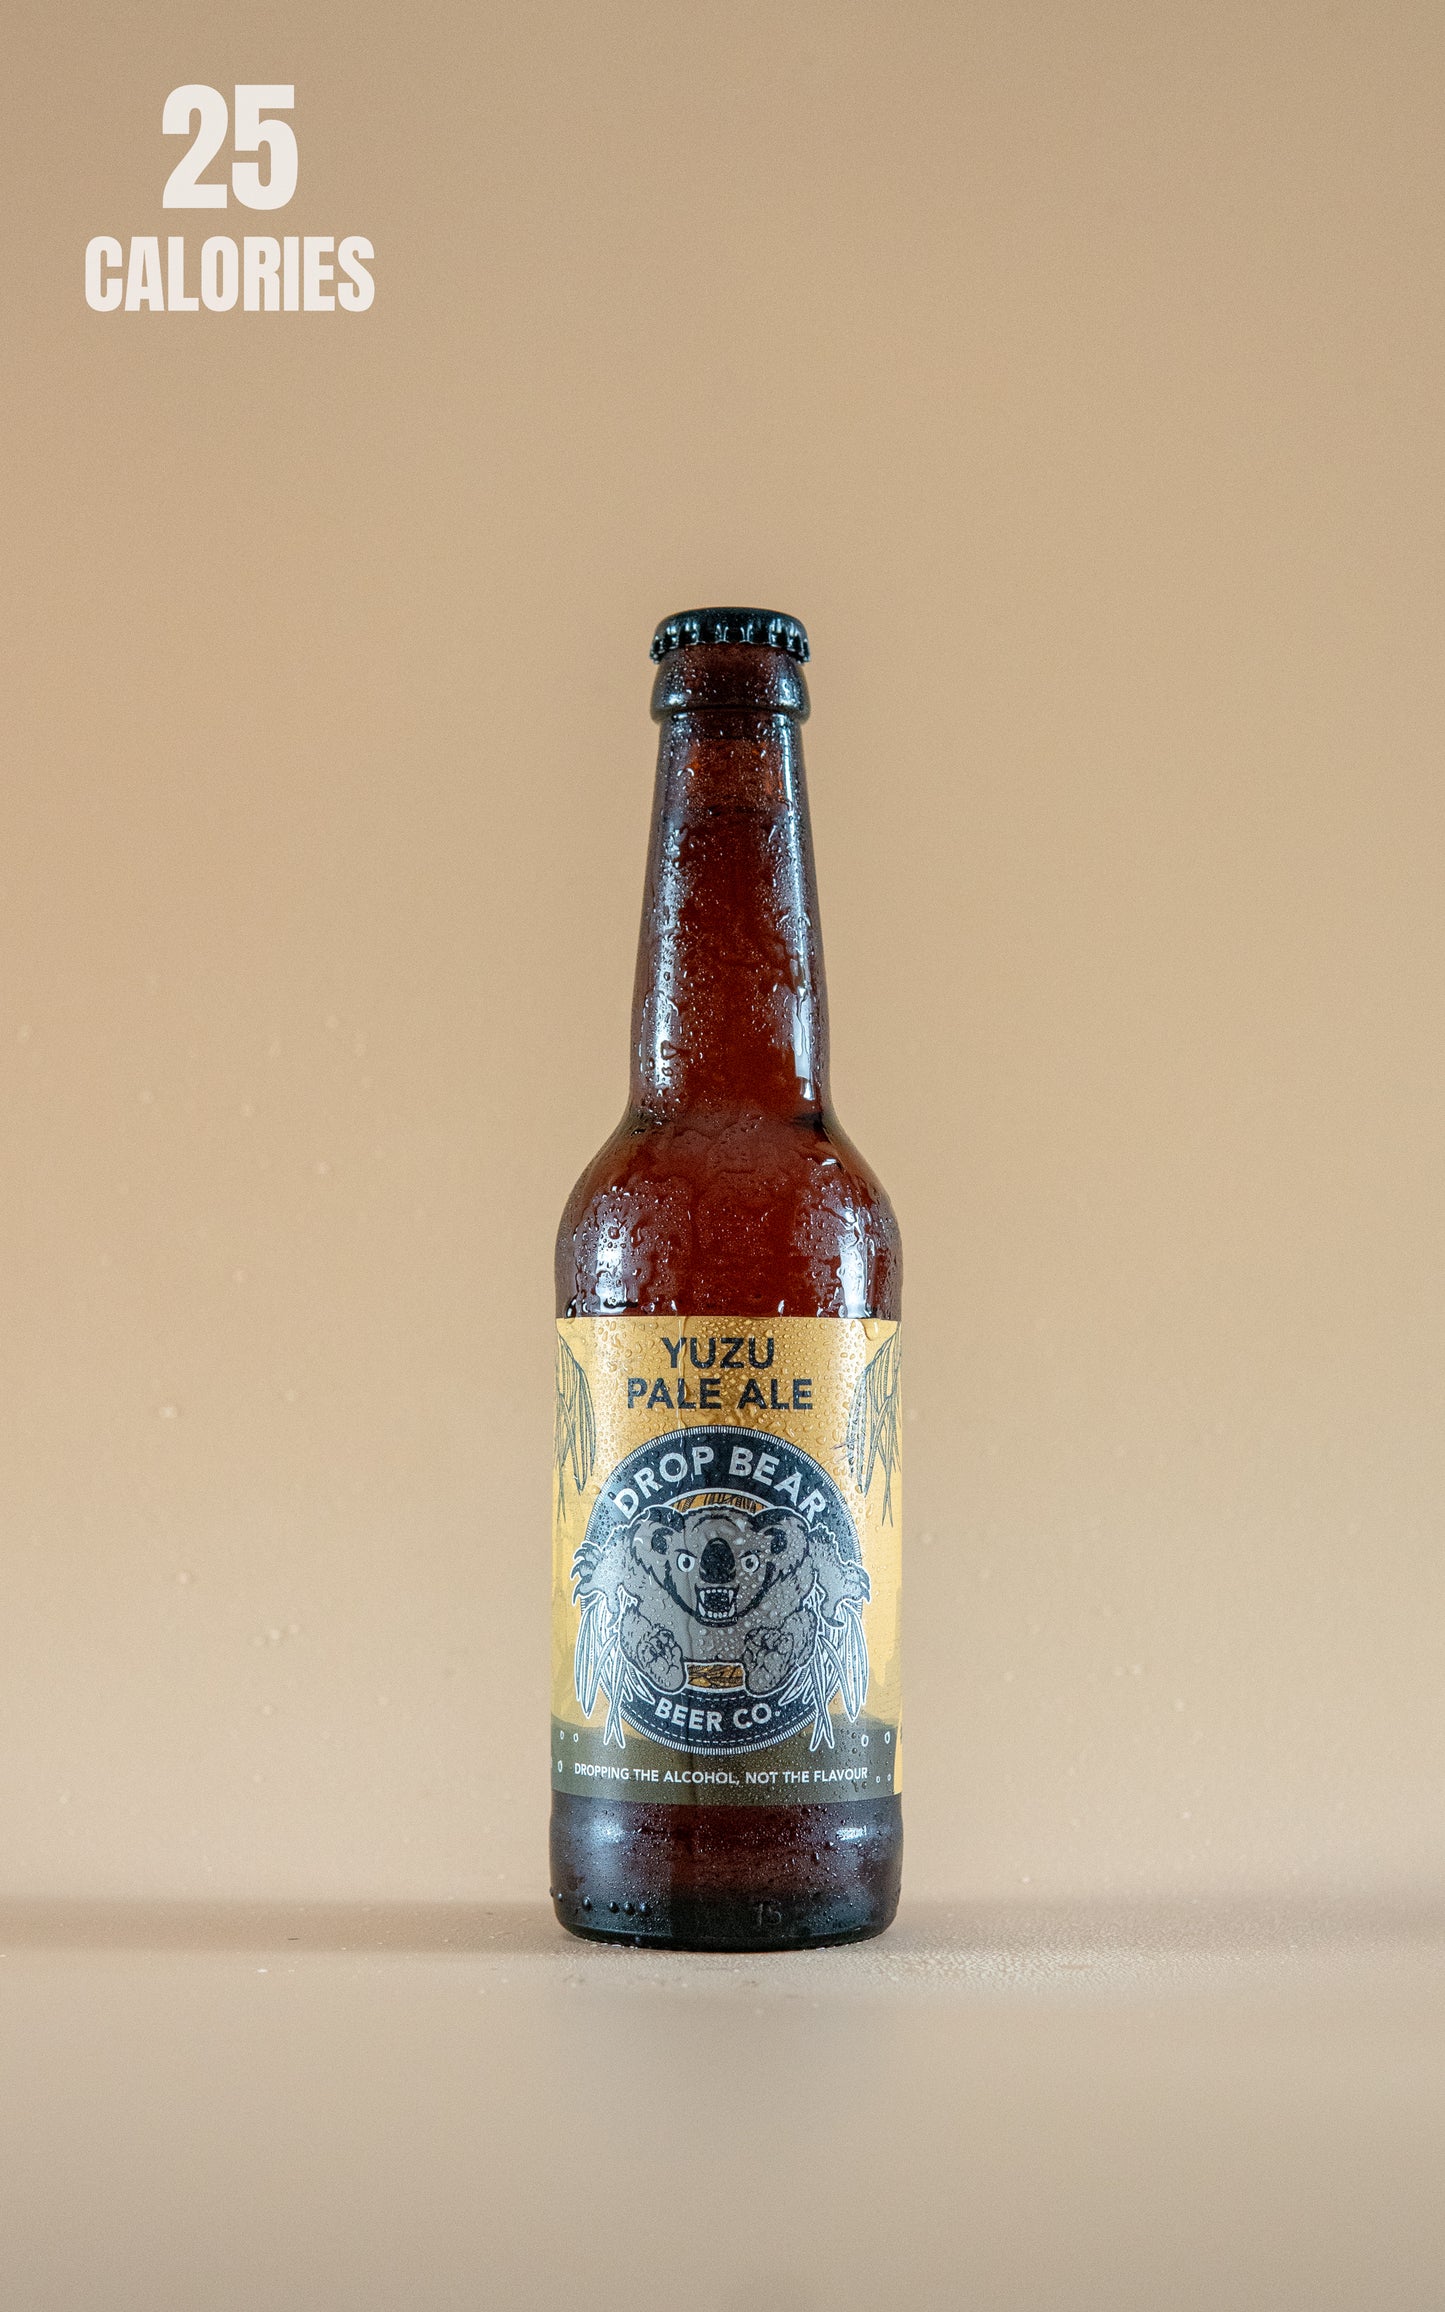 LightDrinks - Drop Bear Beer Co Yuzu Pale Ale 0.4% - 330ml